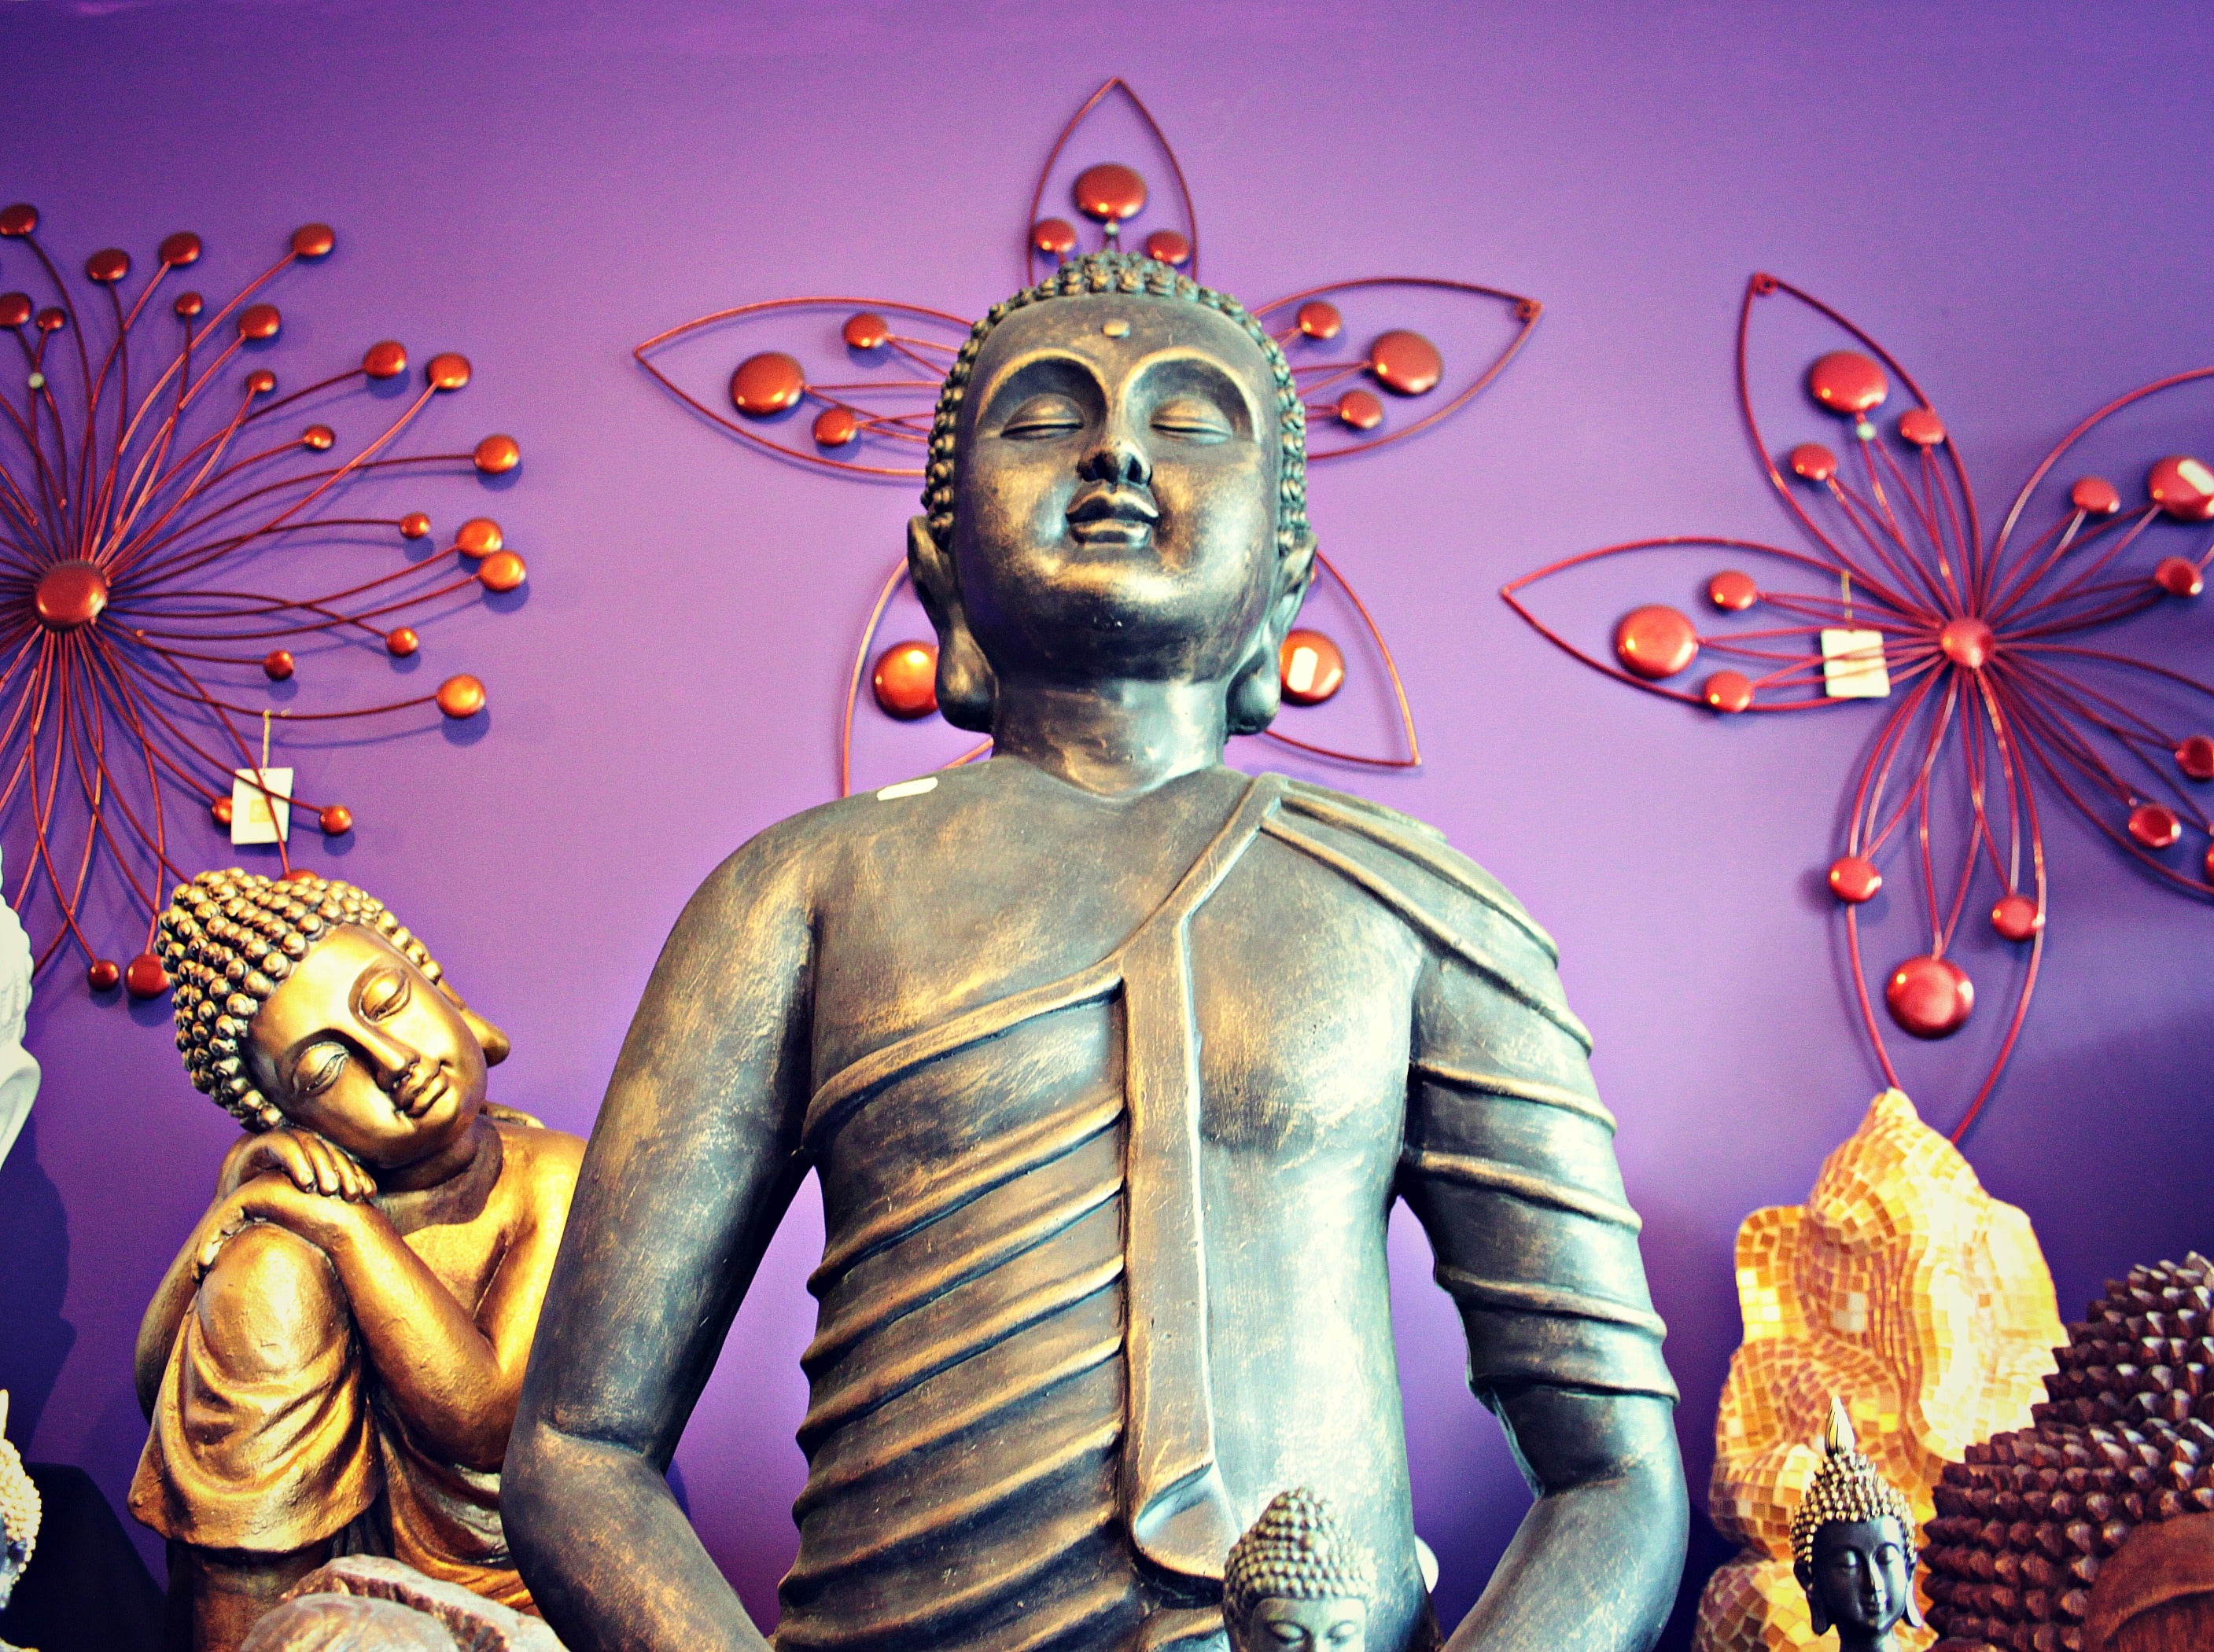 The Gautama Buddha